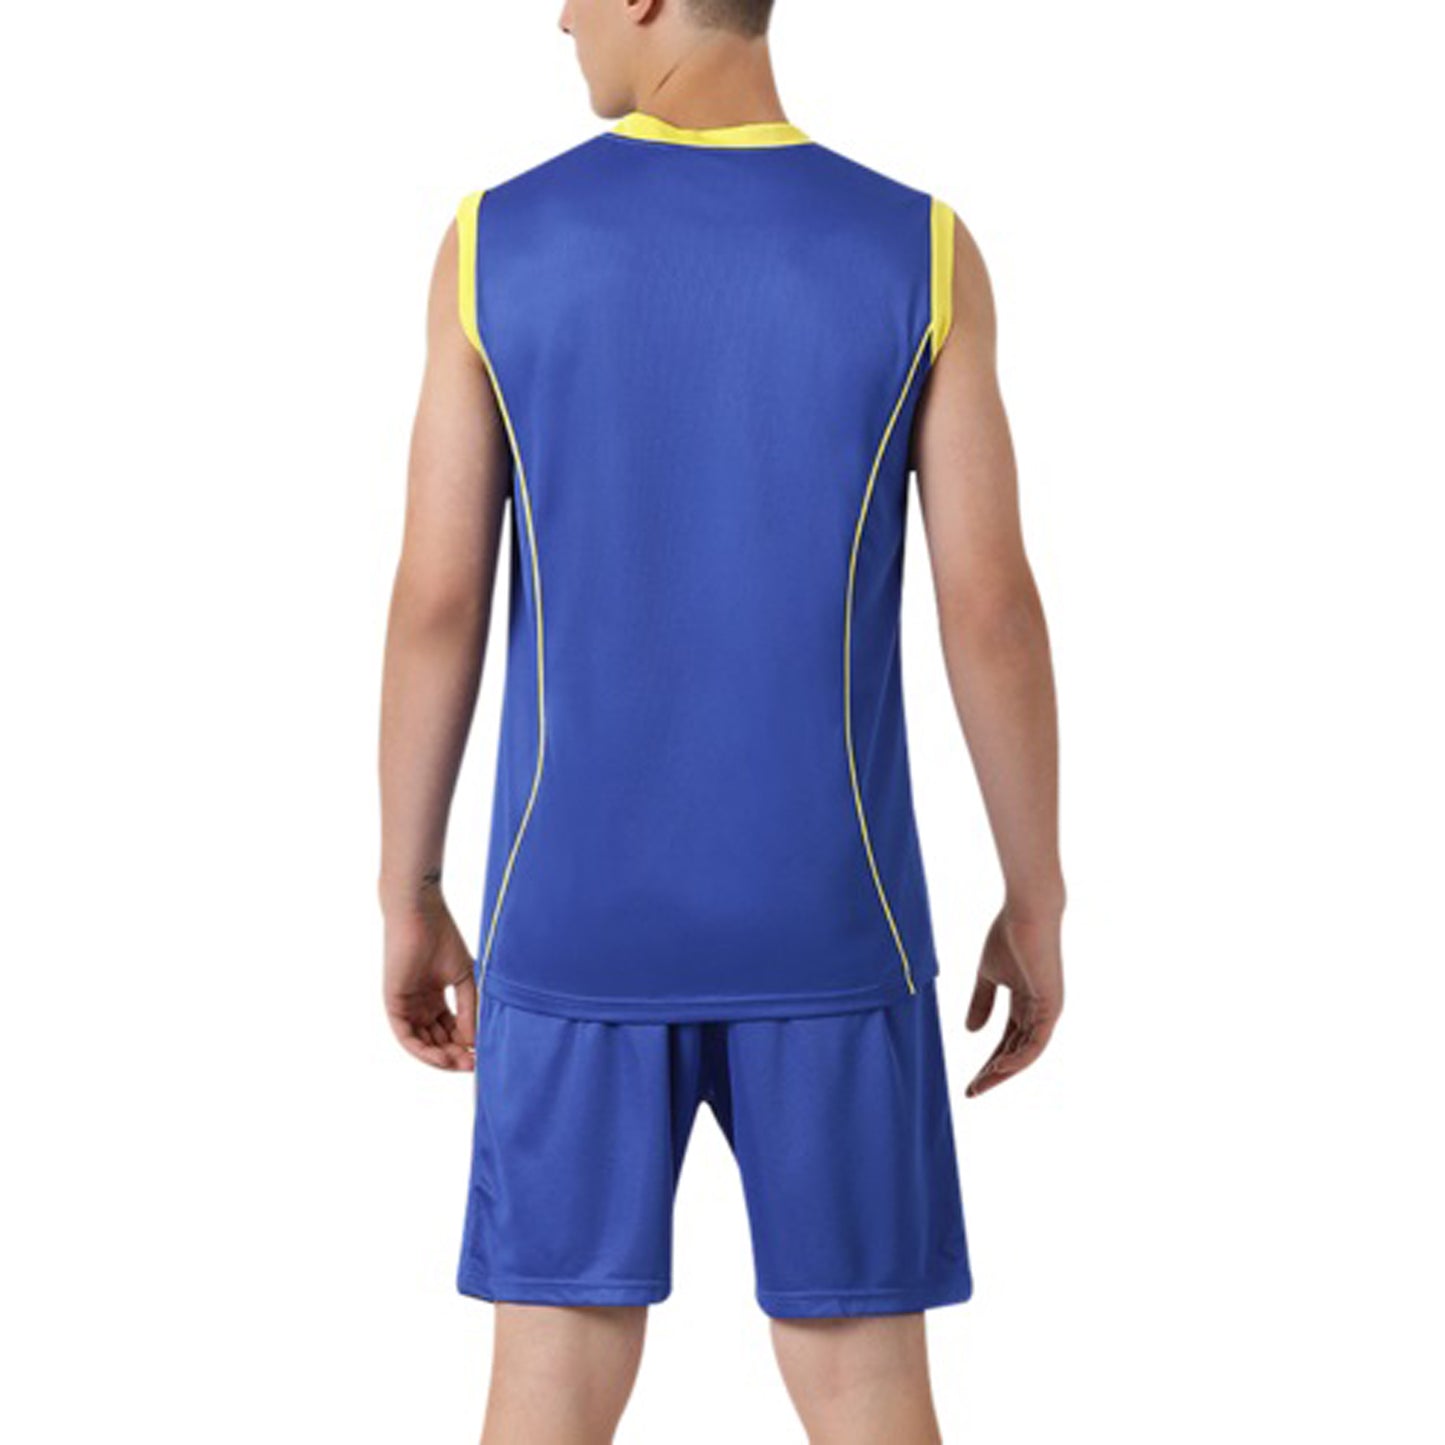 Nivia 2153 Spiral Jersey Set for Men, Royal Blue/Yellow - Best Price online Prokicksports.com